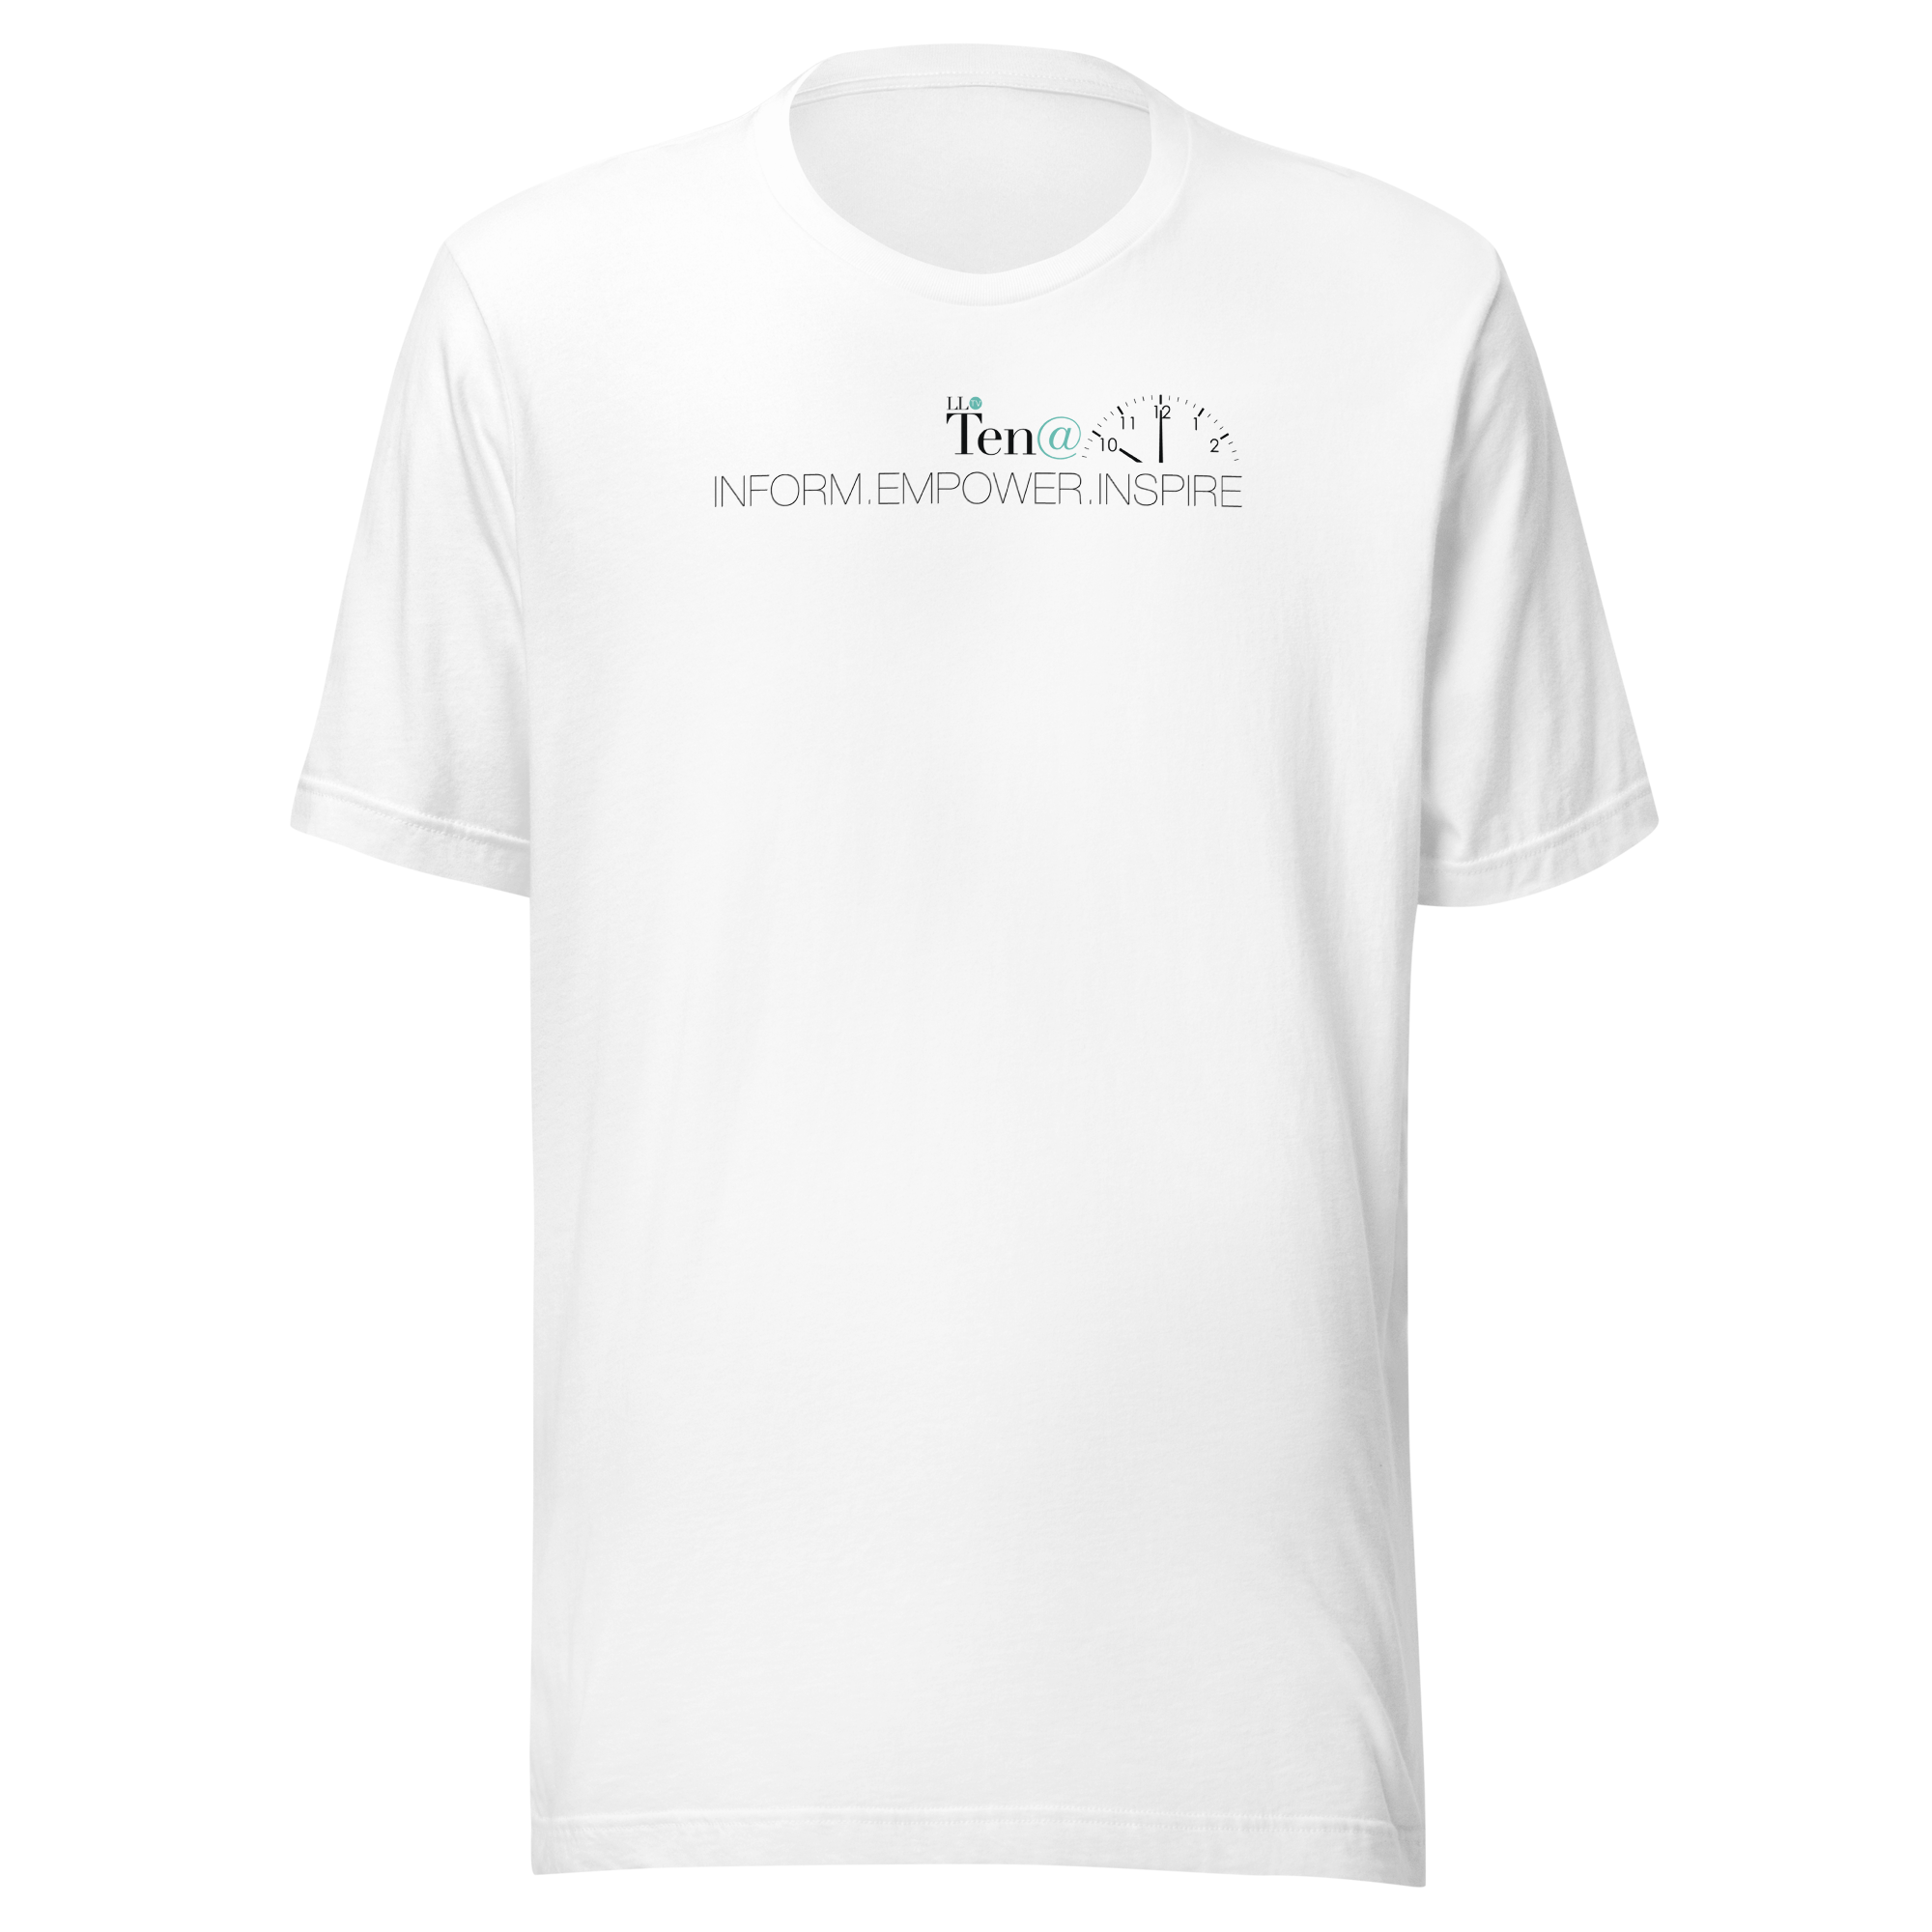 Ten@10 INFORM EMPOWER INSPIRE - Unisex t-shirt